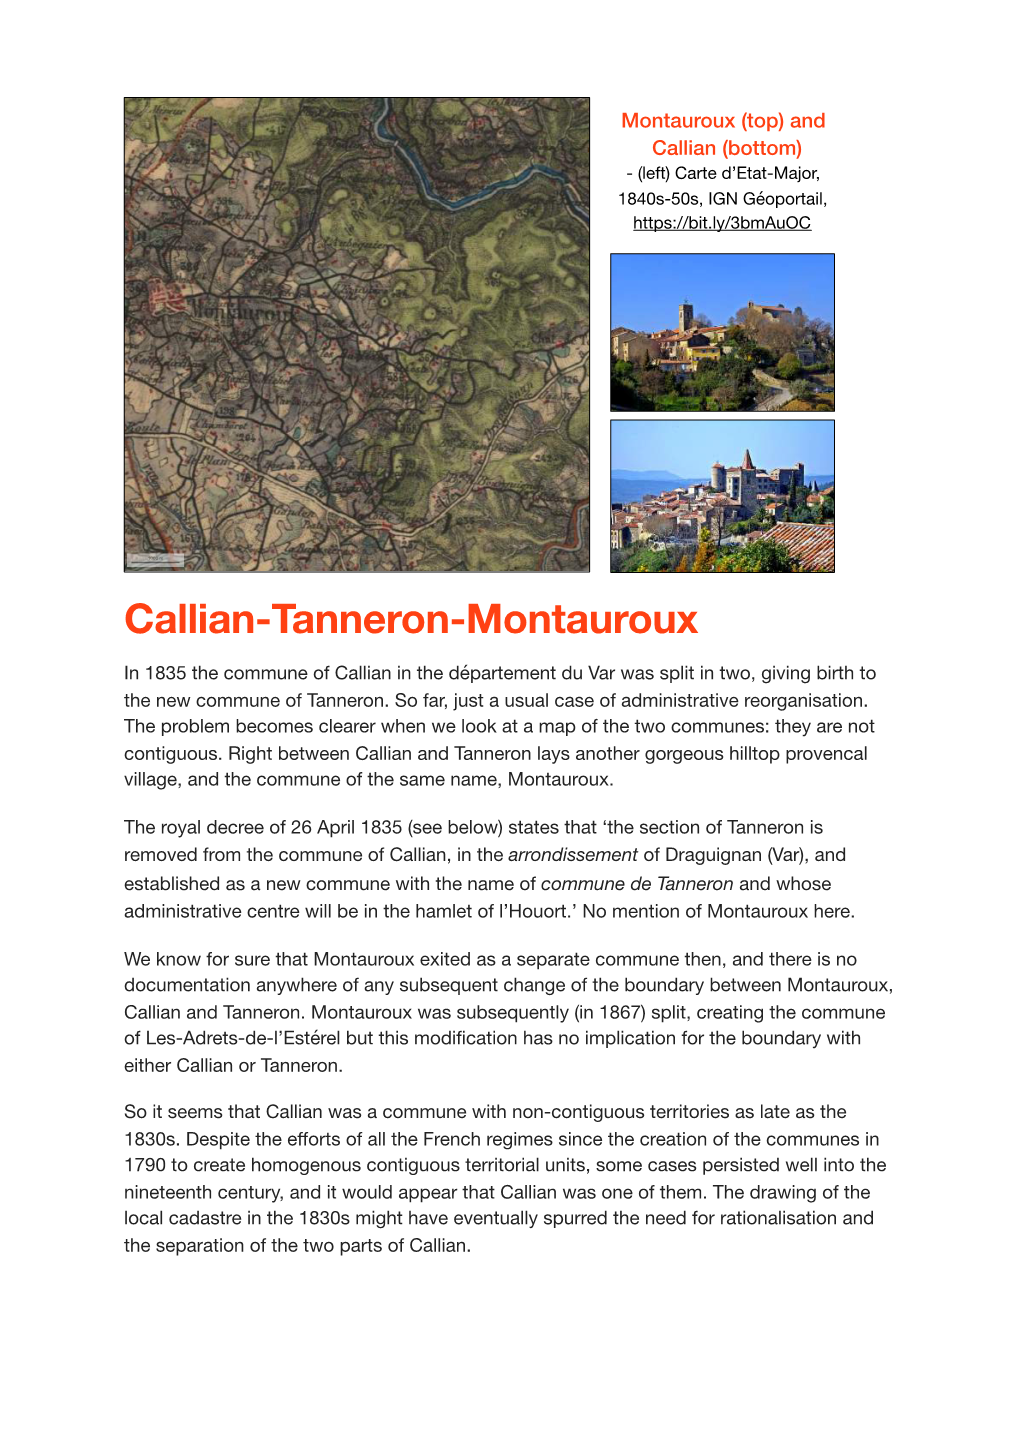 Callian-Tanneron-Montauroux